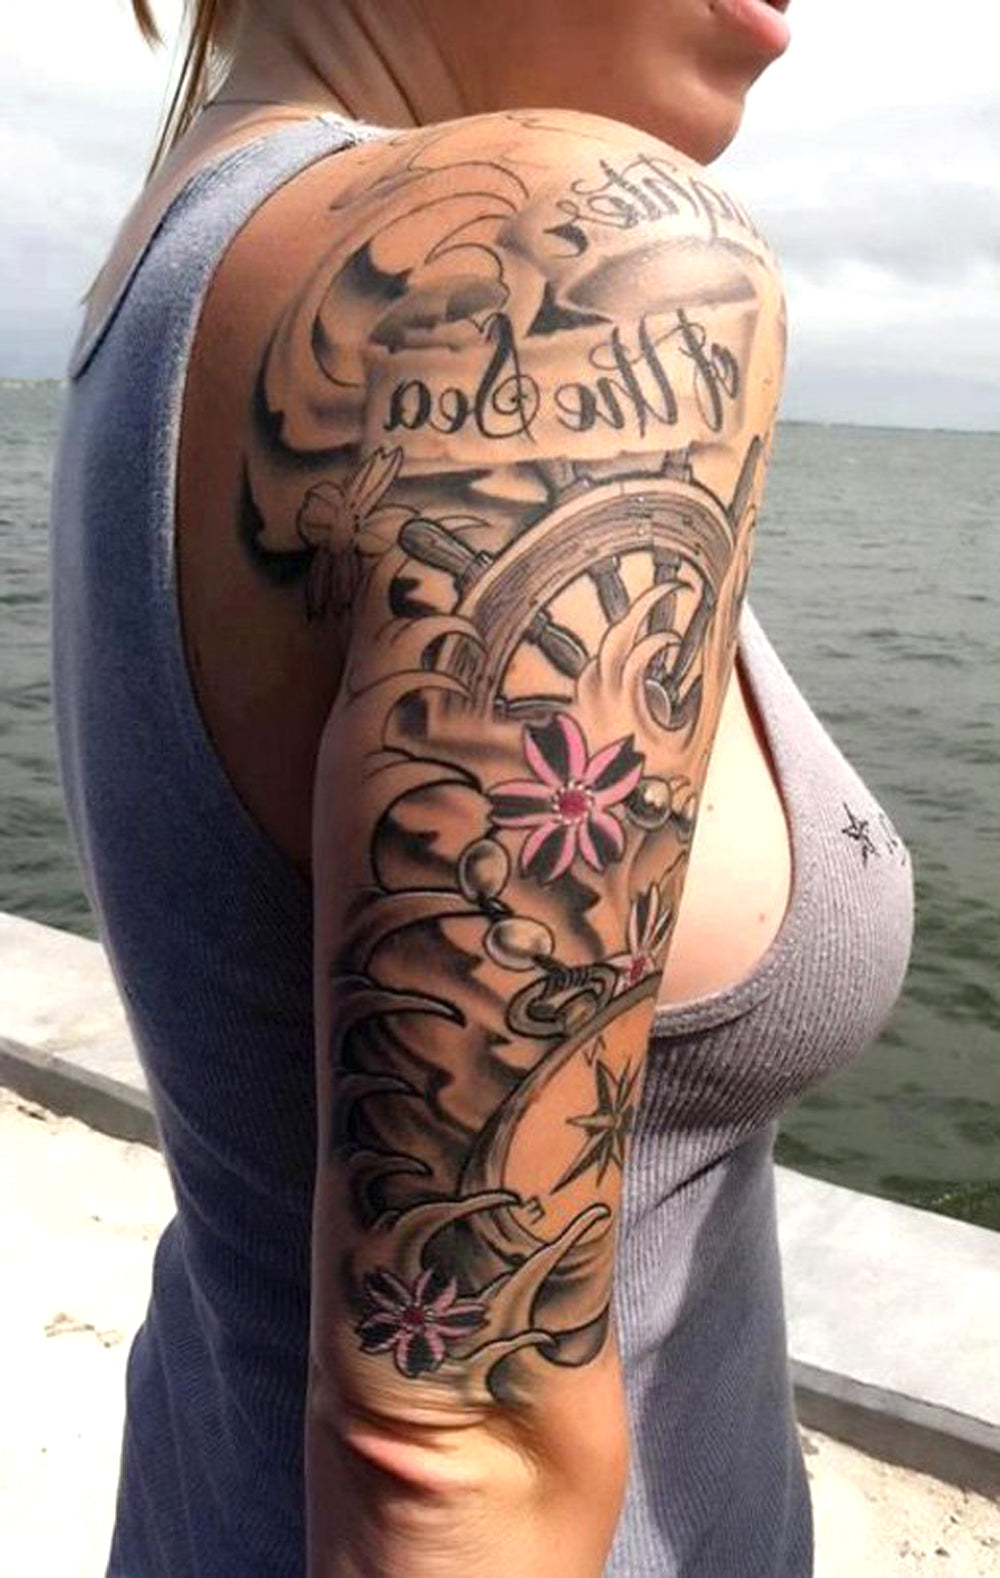 Black Full Arm Sleeve Tattoo Ideas for Women - Sea Flower Rudder Bicep Tat -  ideas de tatuaje manga negro brazo para mujeres -  www.MyBodiaArt.com